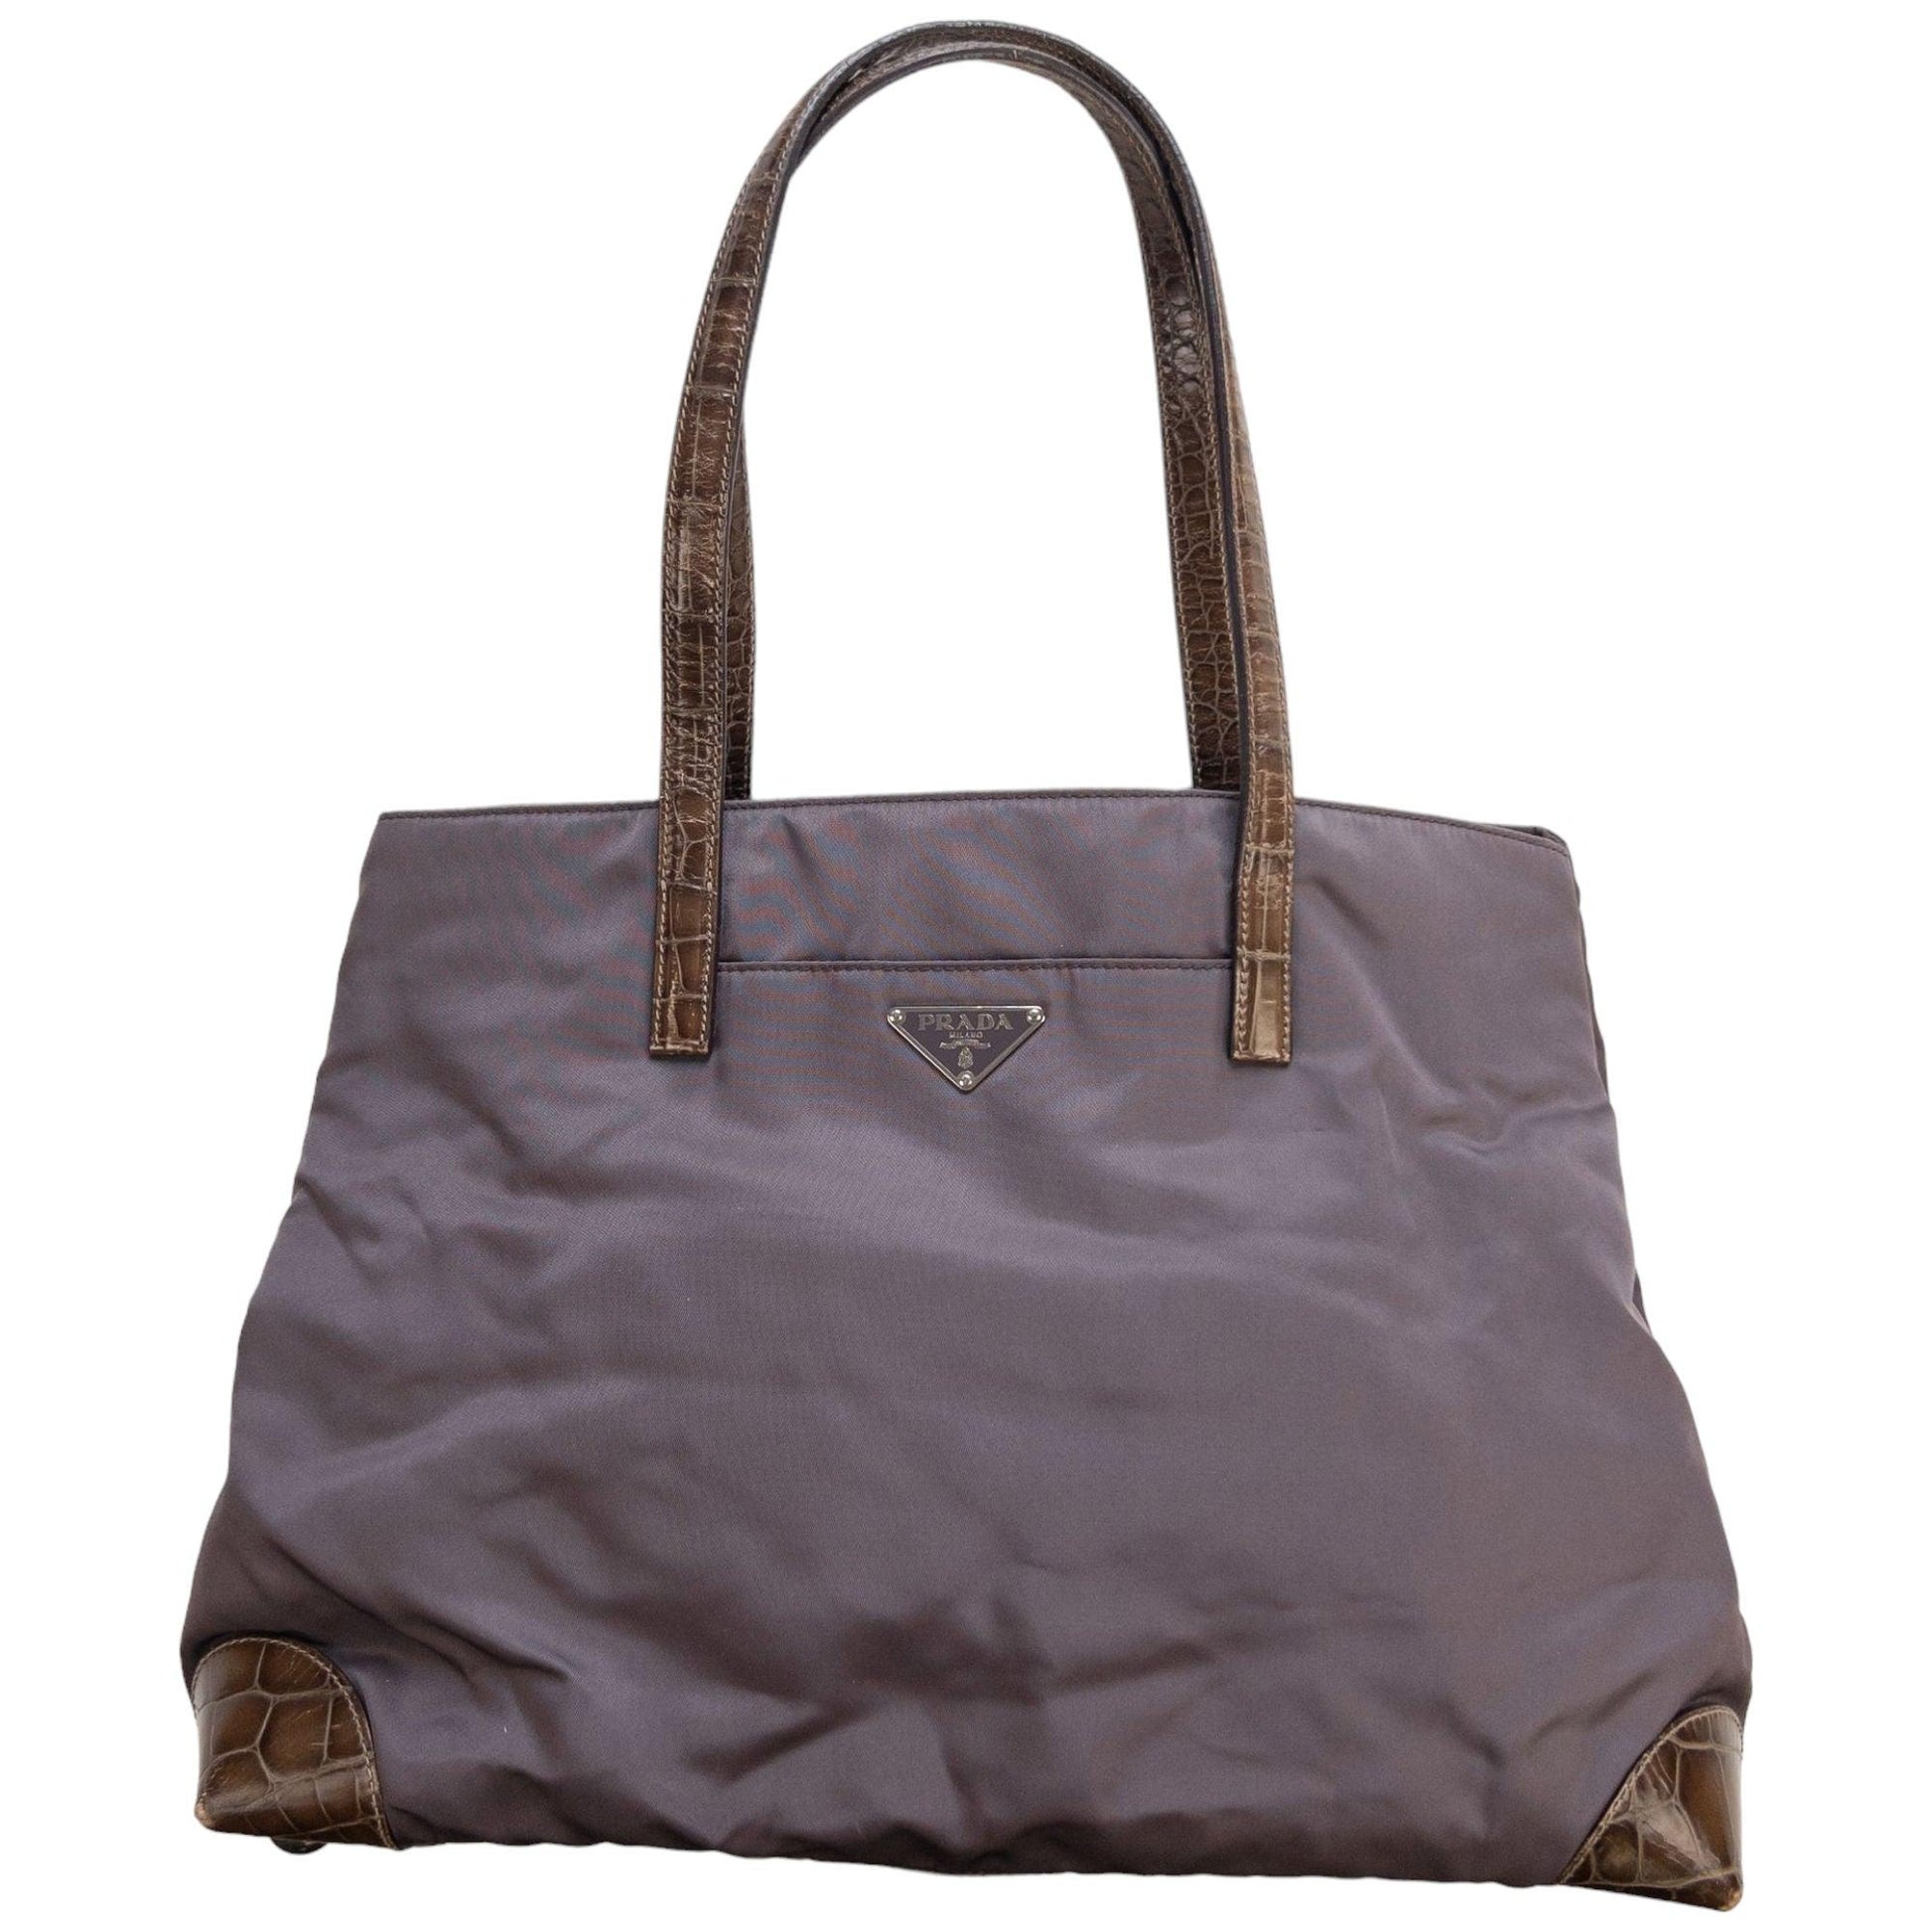 Vintage Prada Nylon Shoulder Bag - Known Source